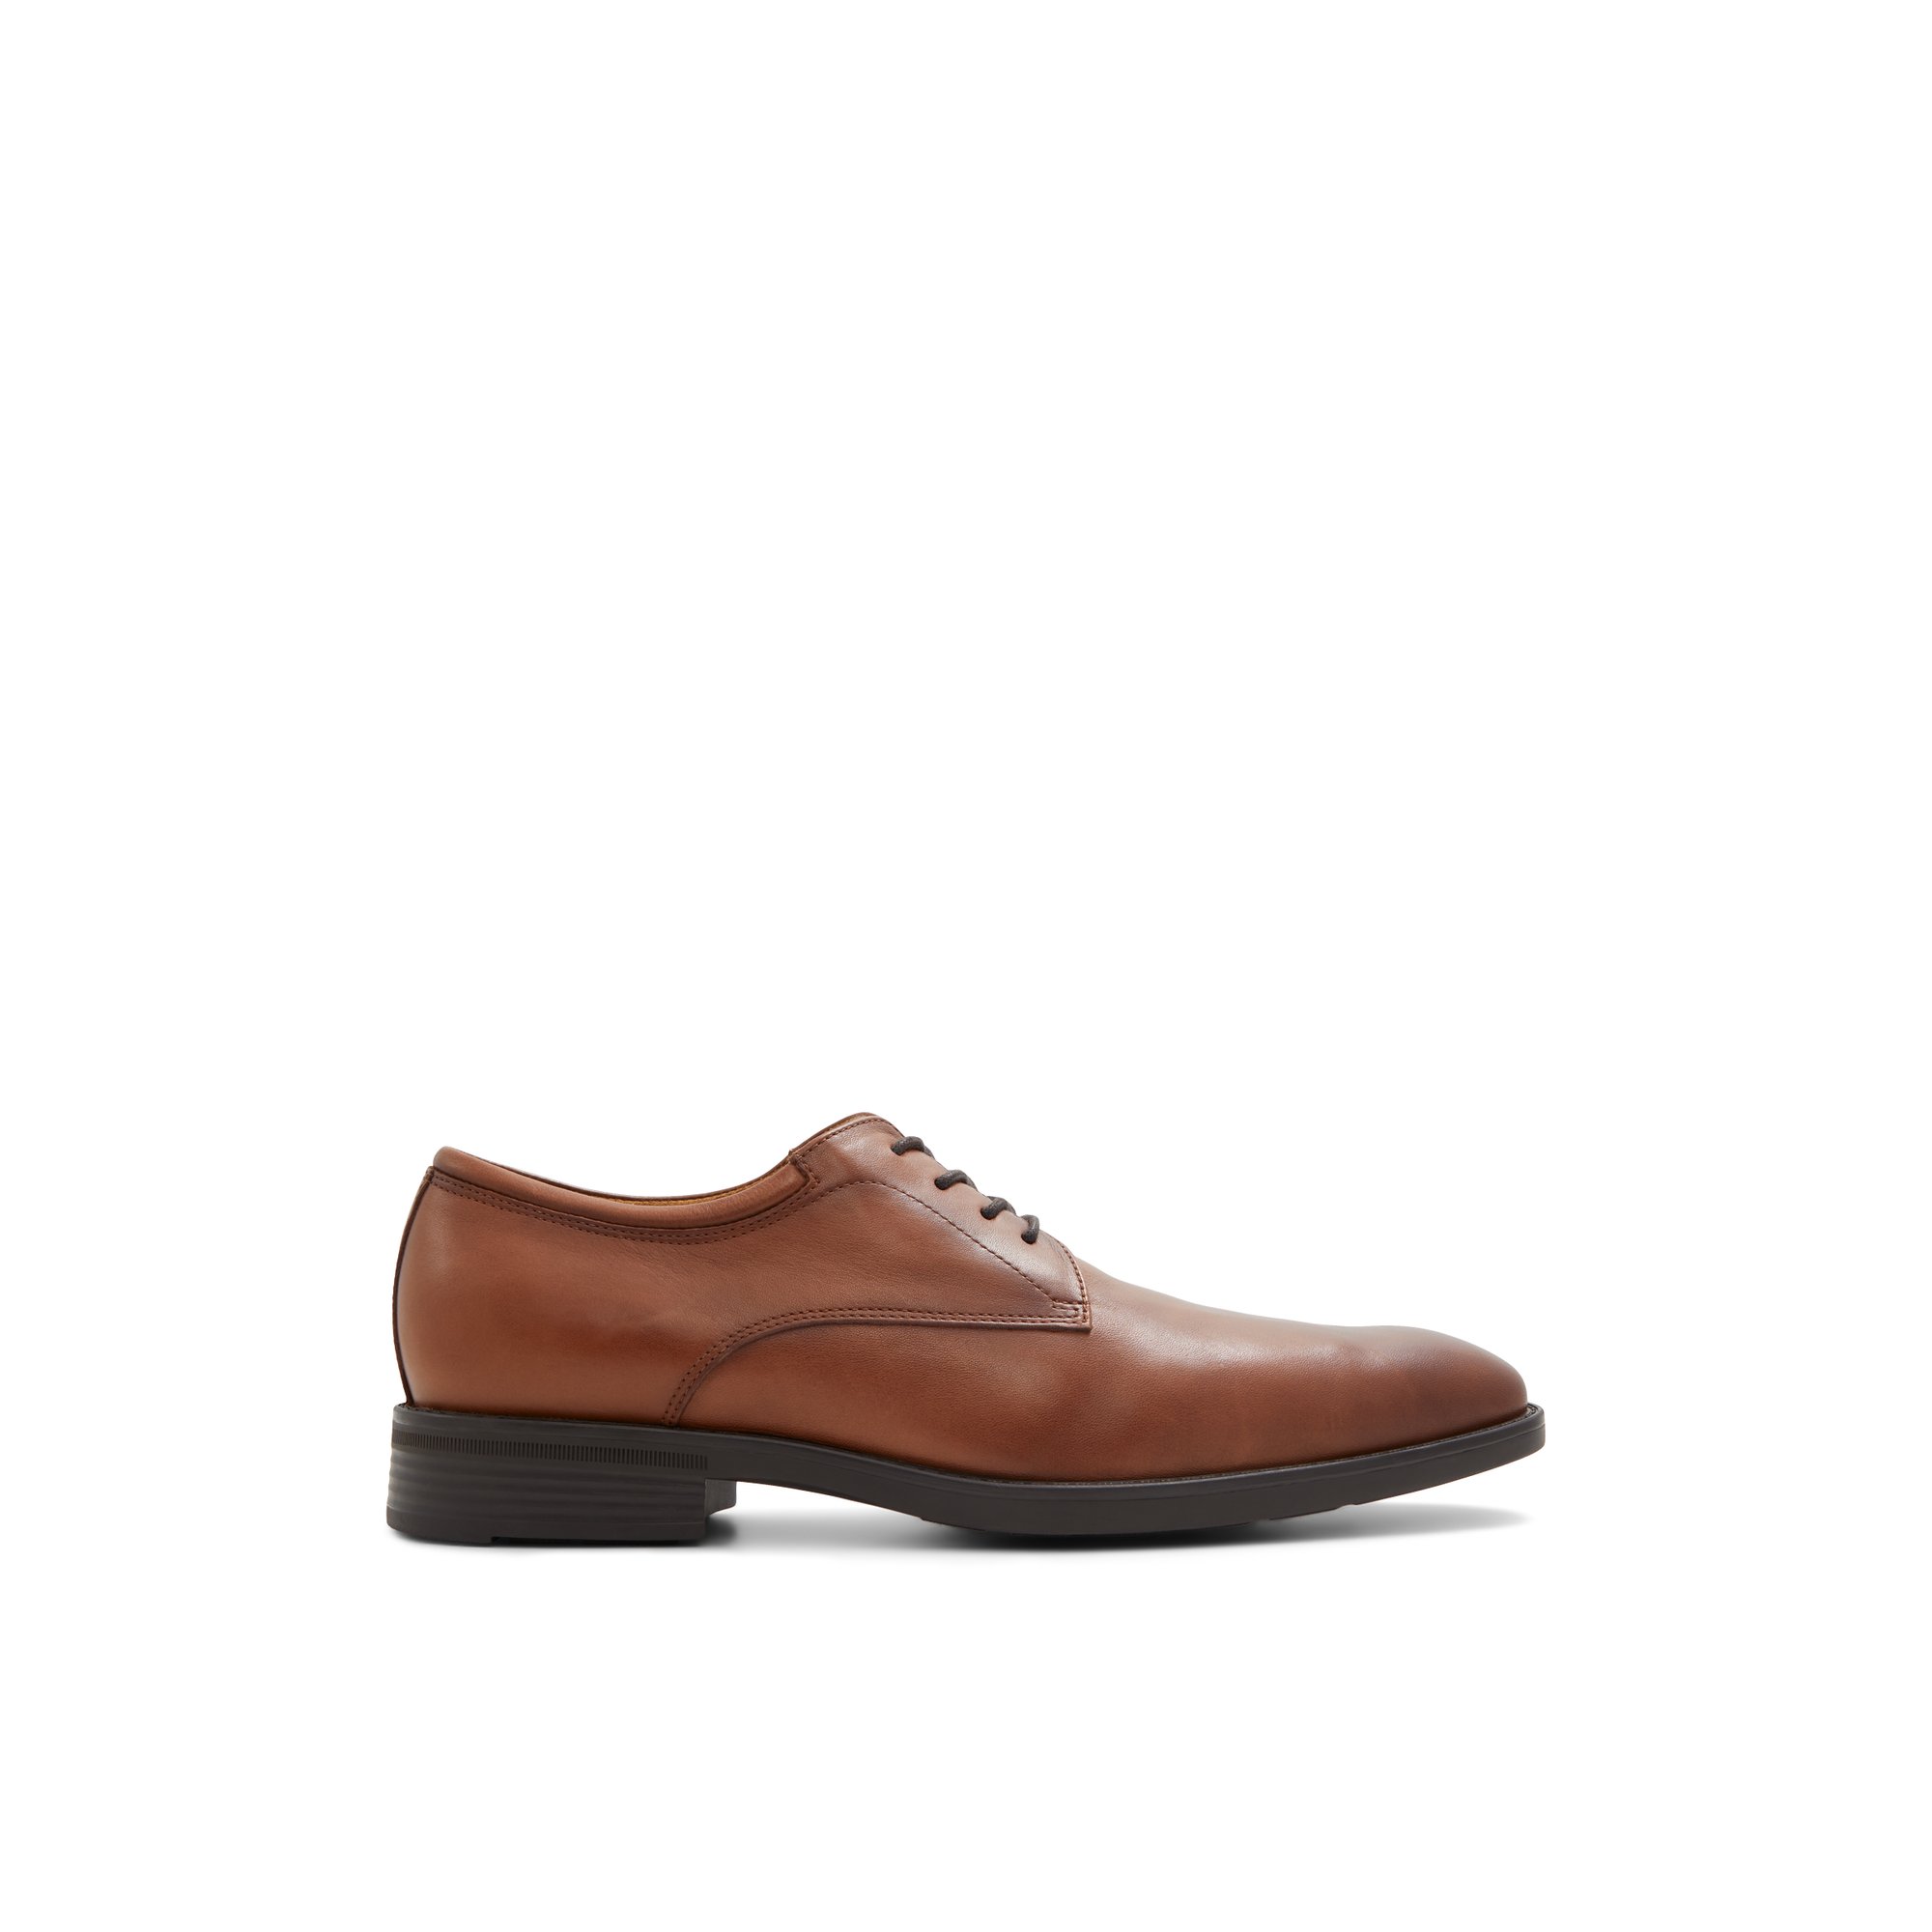 ALDO Keagan - Men's Dress Shoes - Brown